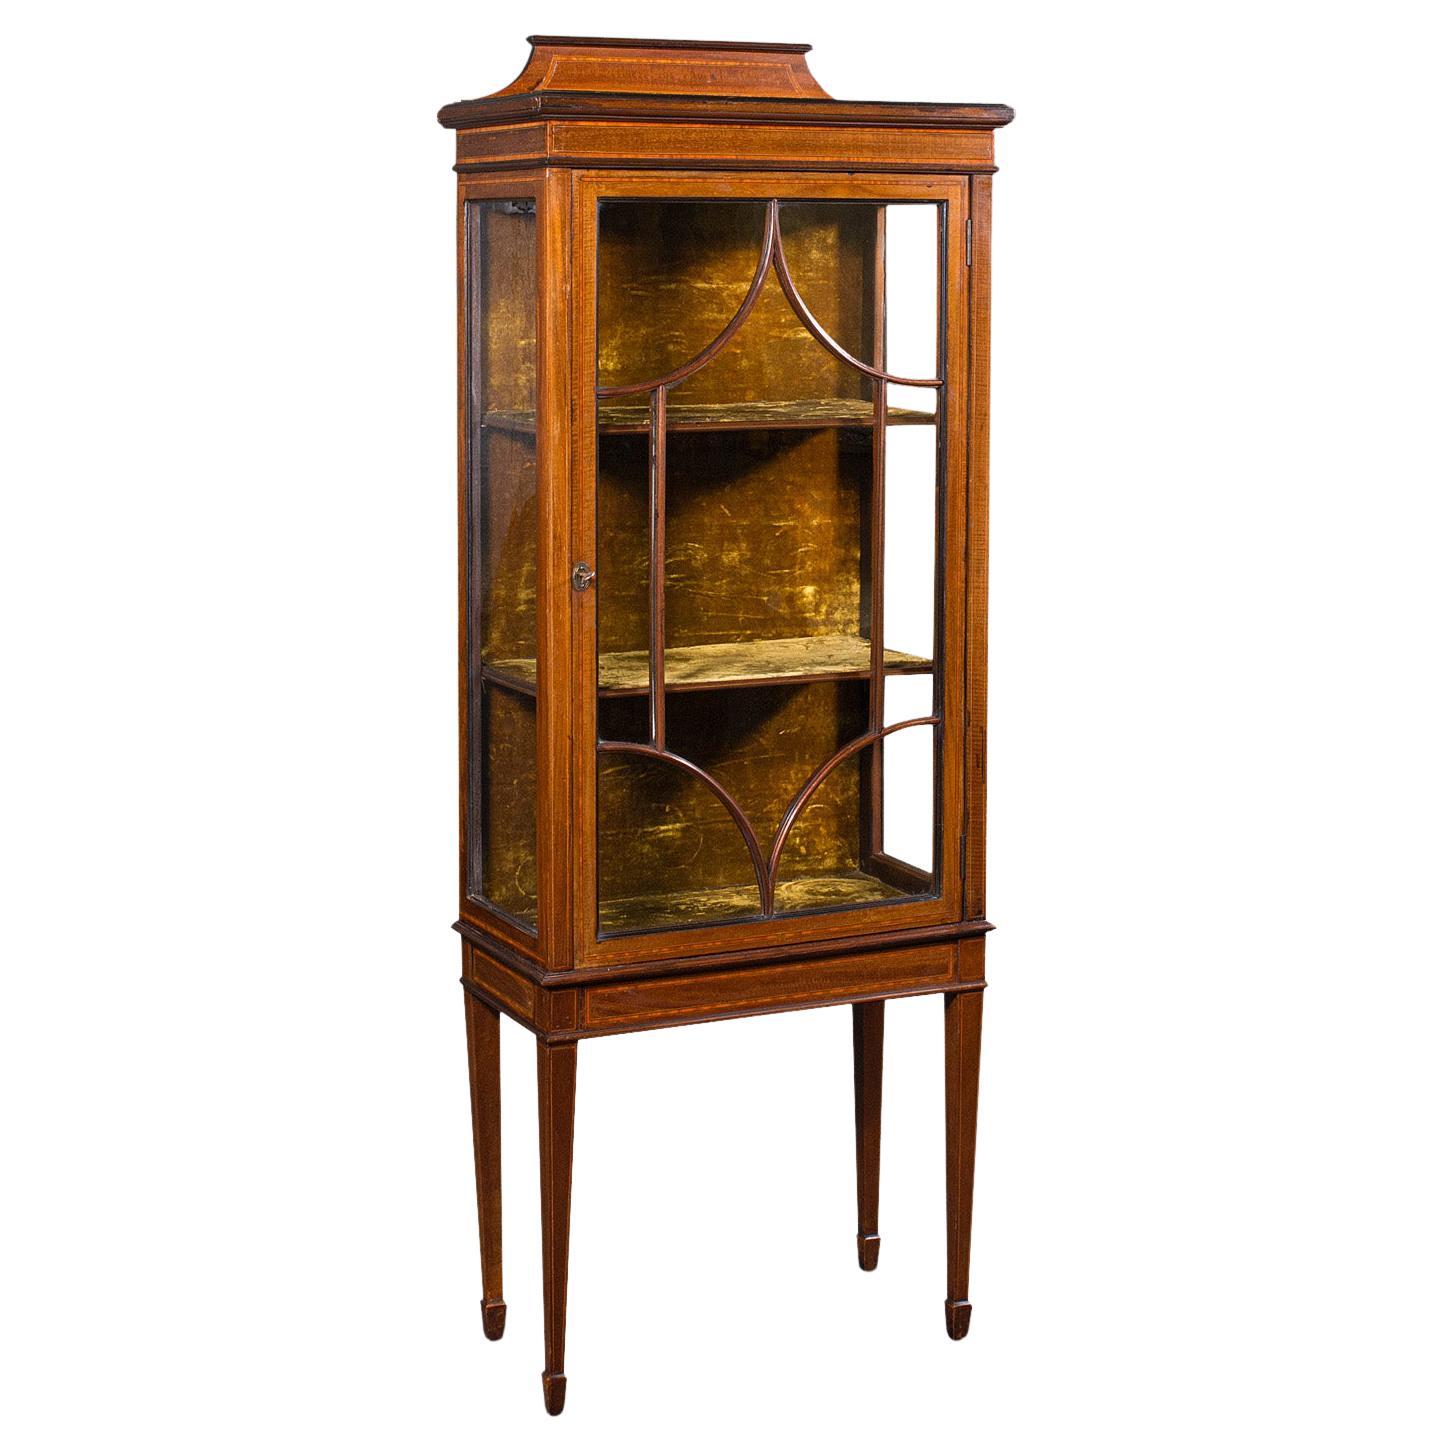 Antique Pier Cabinet on Stand, English, Walnut, Glazed Display Case, Edwardian